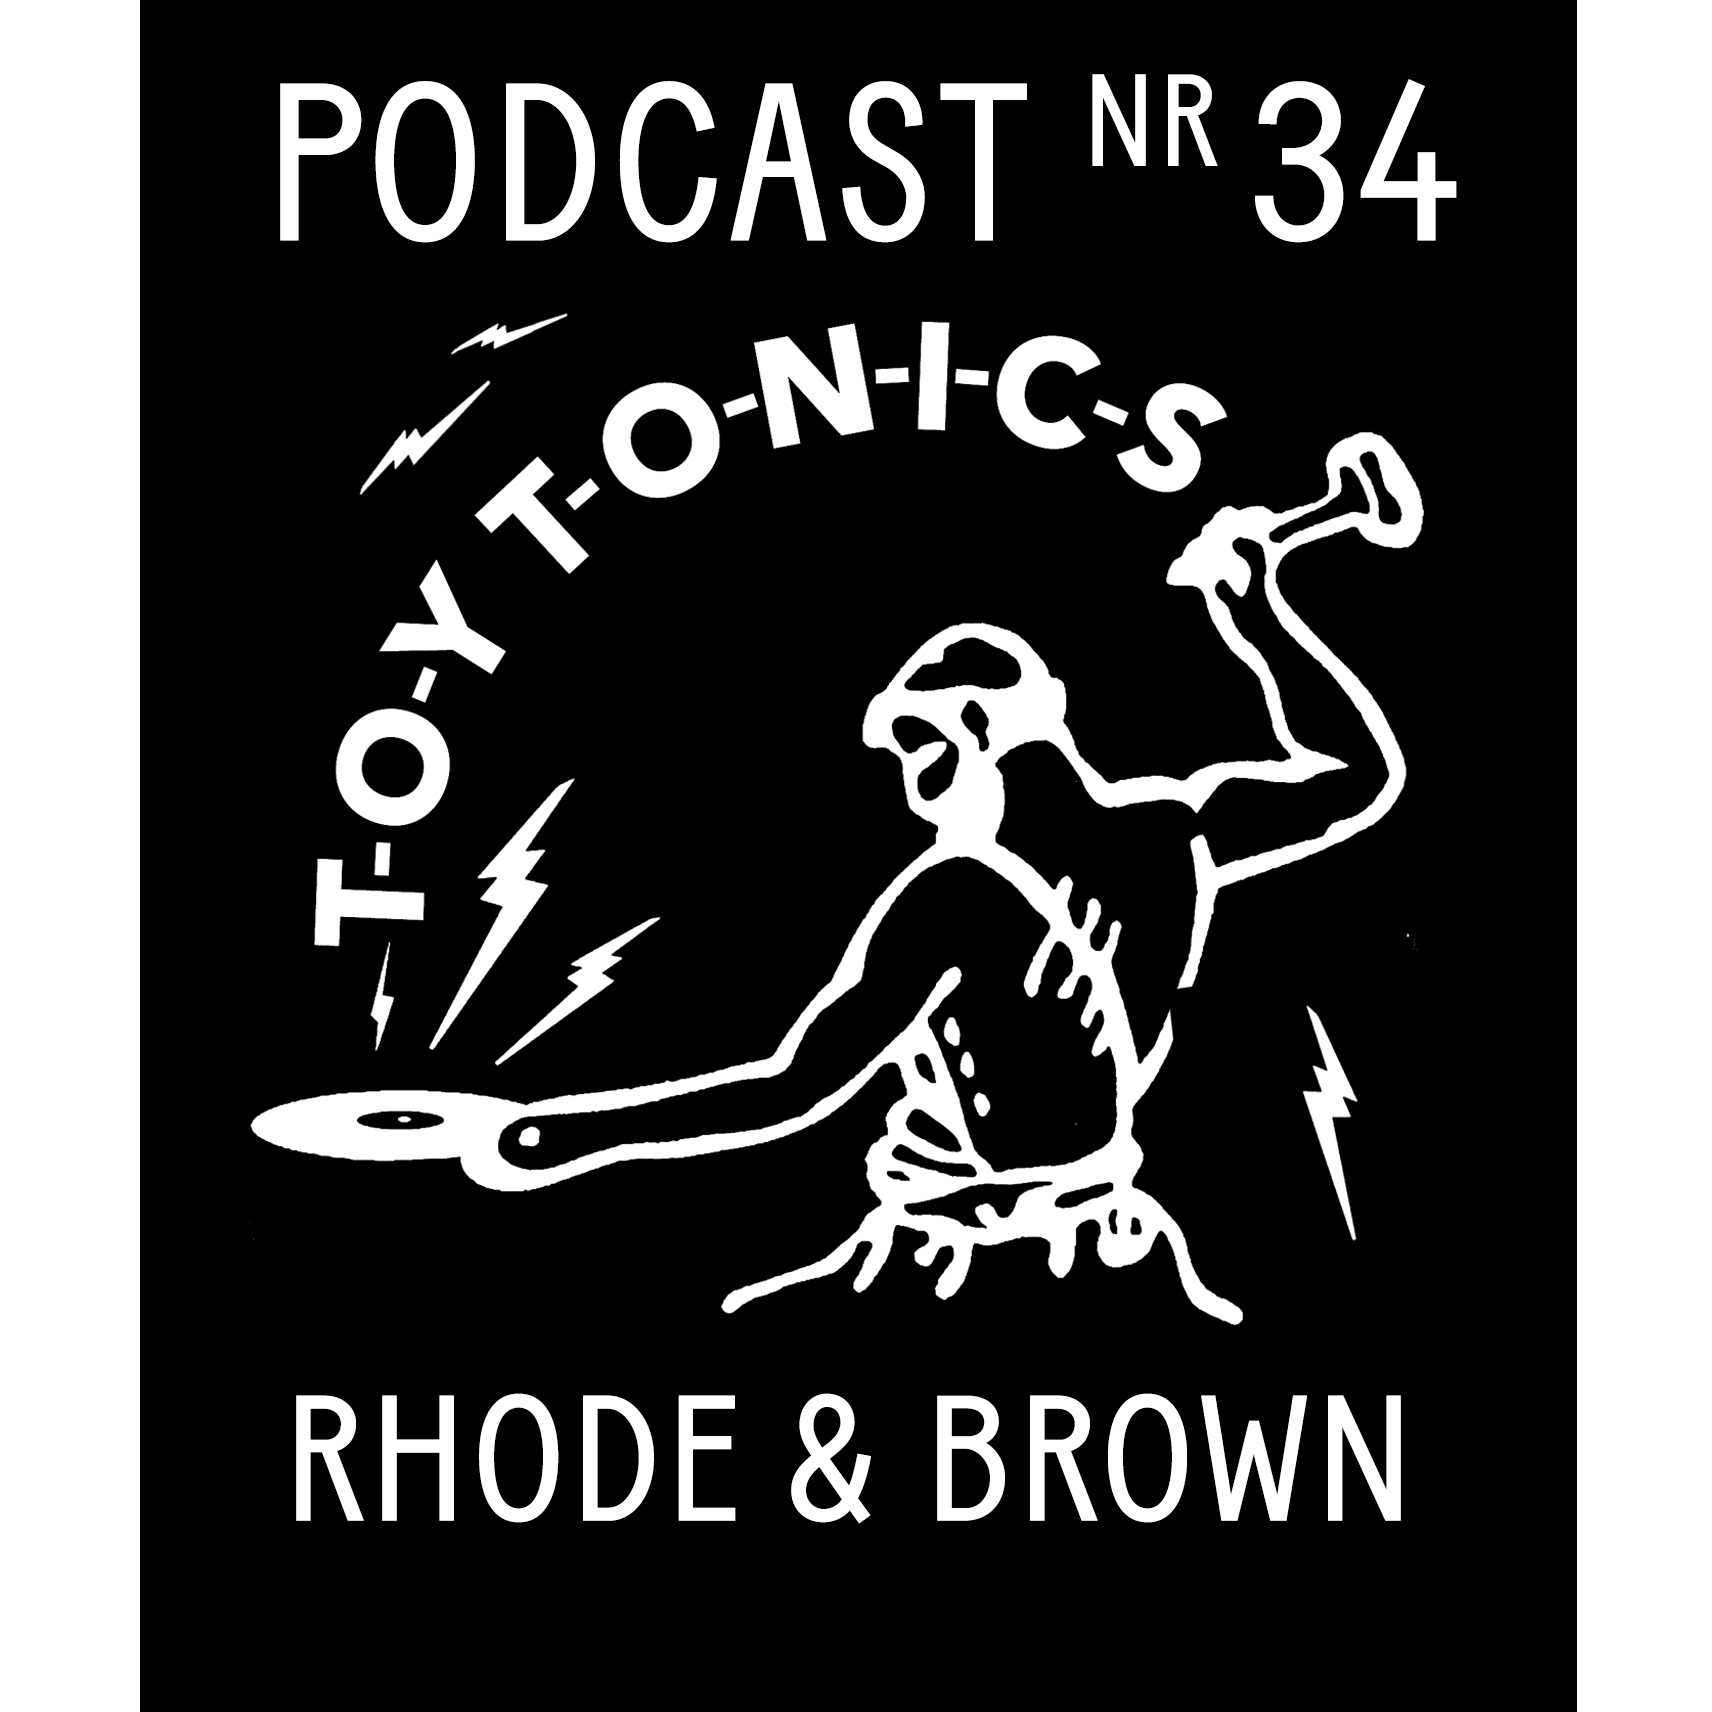 PODCAST NR 34 - Rhode & Brown